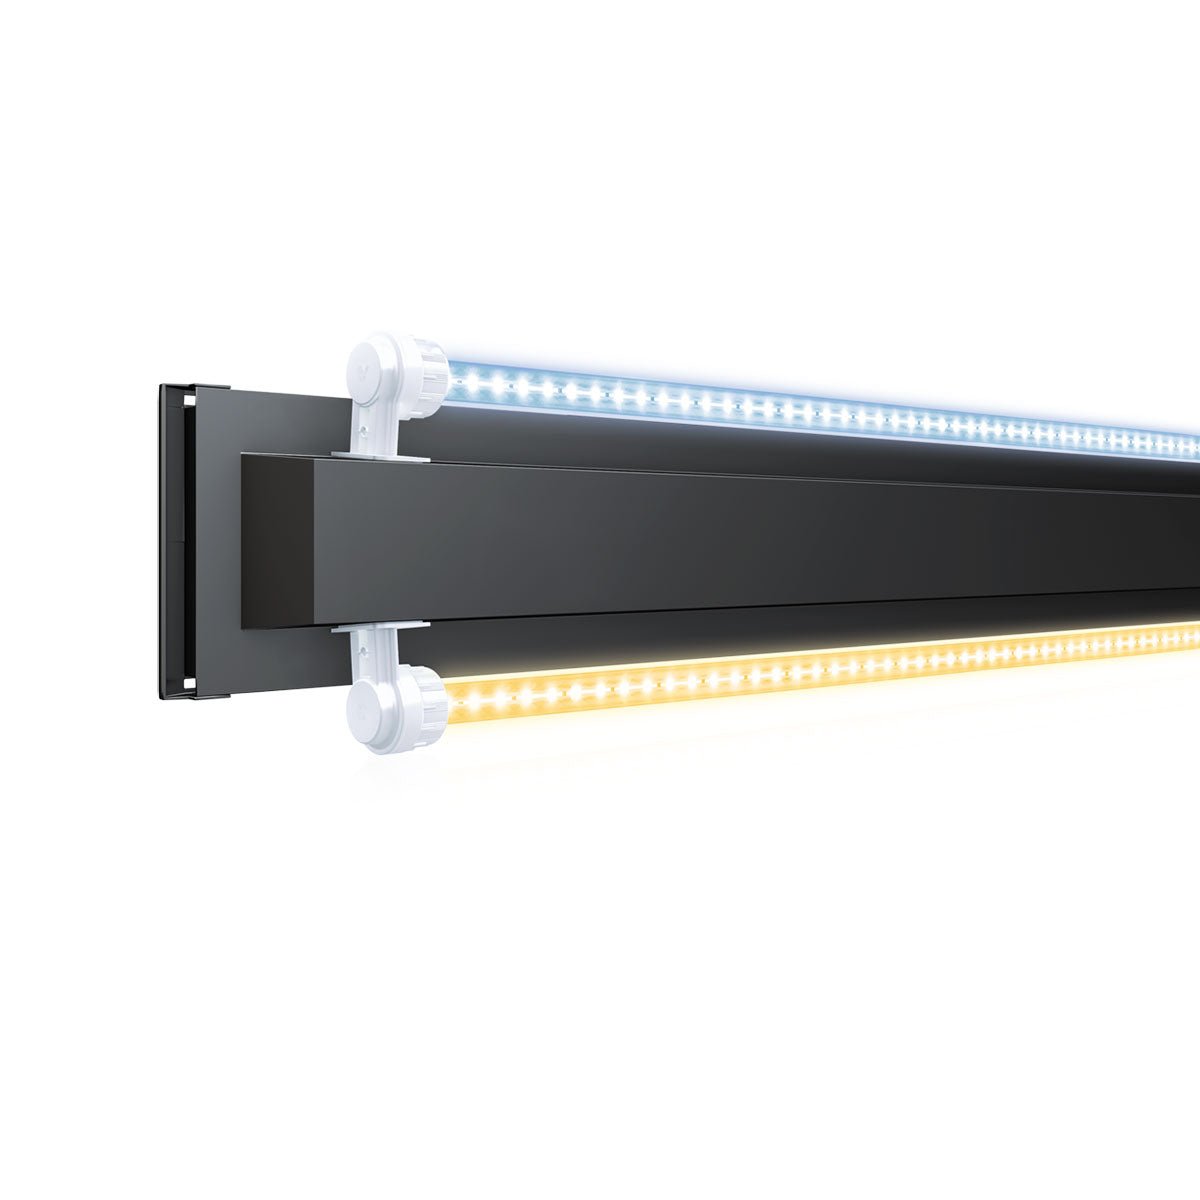 Juwel MultiLux LED Unit - 60cm - Charterhouse Aquatics